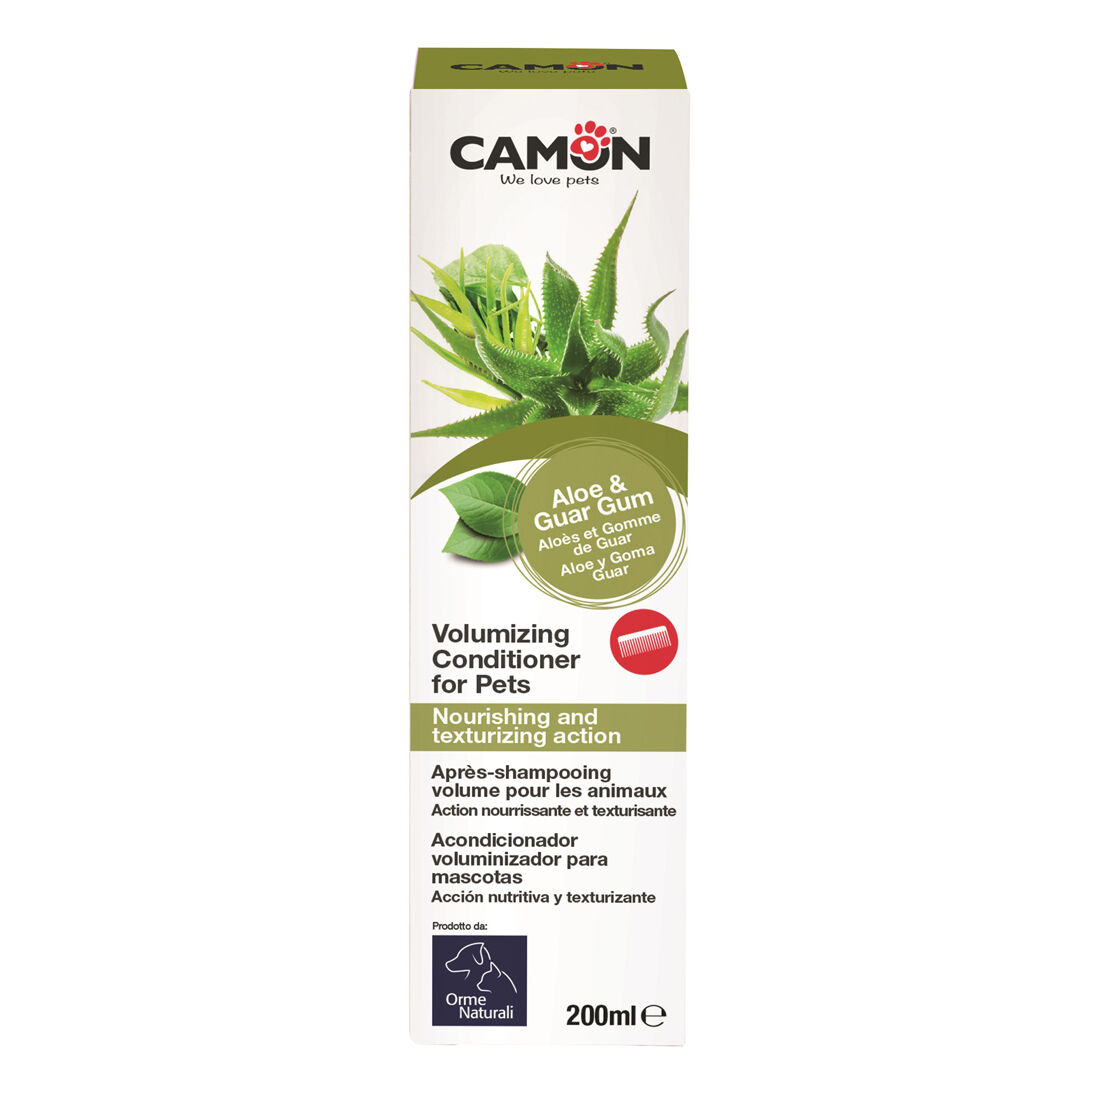 Camon-Orme-Naturali-Volumen-Conditioner-Haarspuelung-gegen-Verfilzung-CO-G807